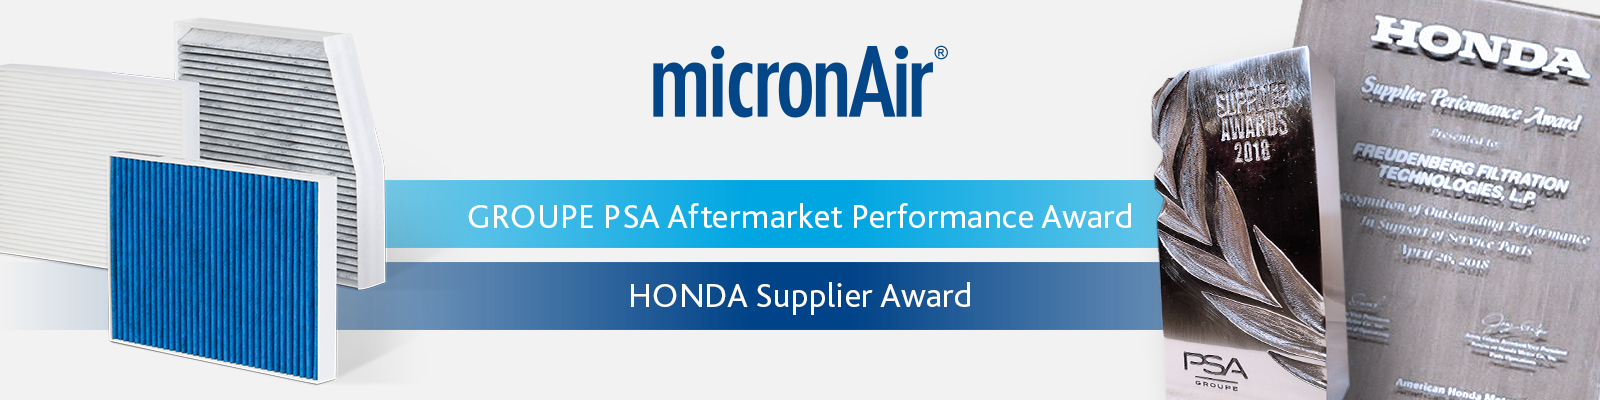 micronAir Supplier Awards